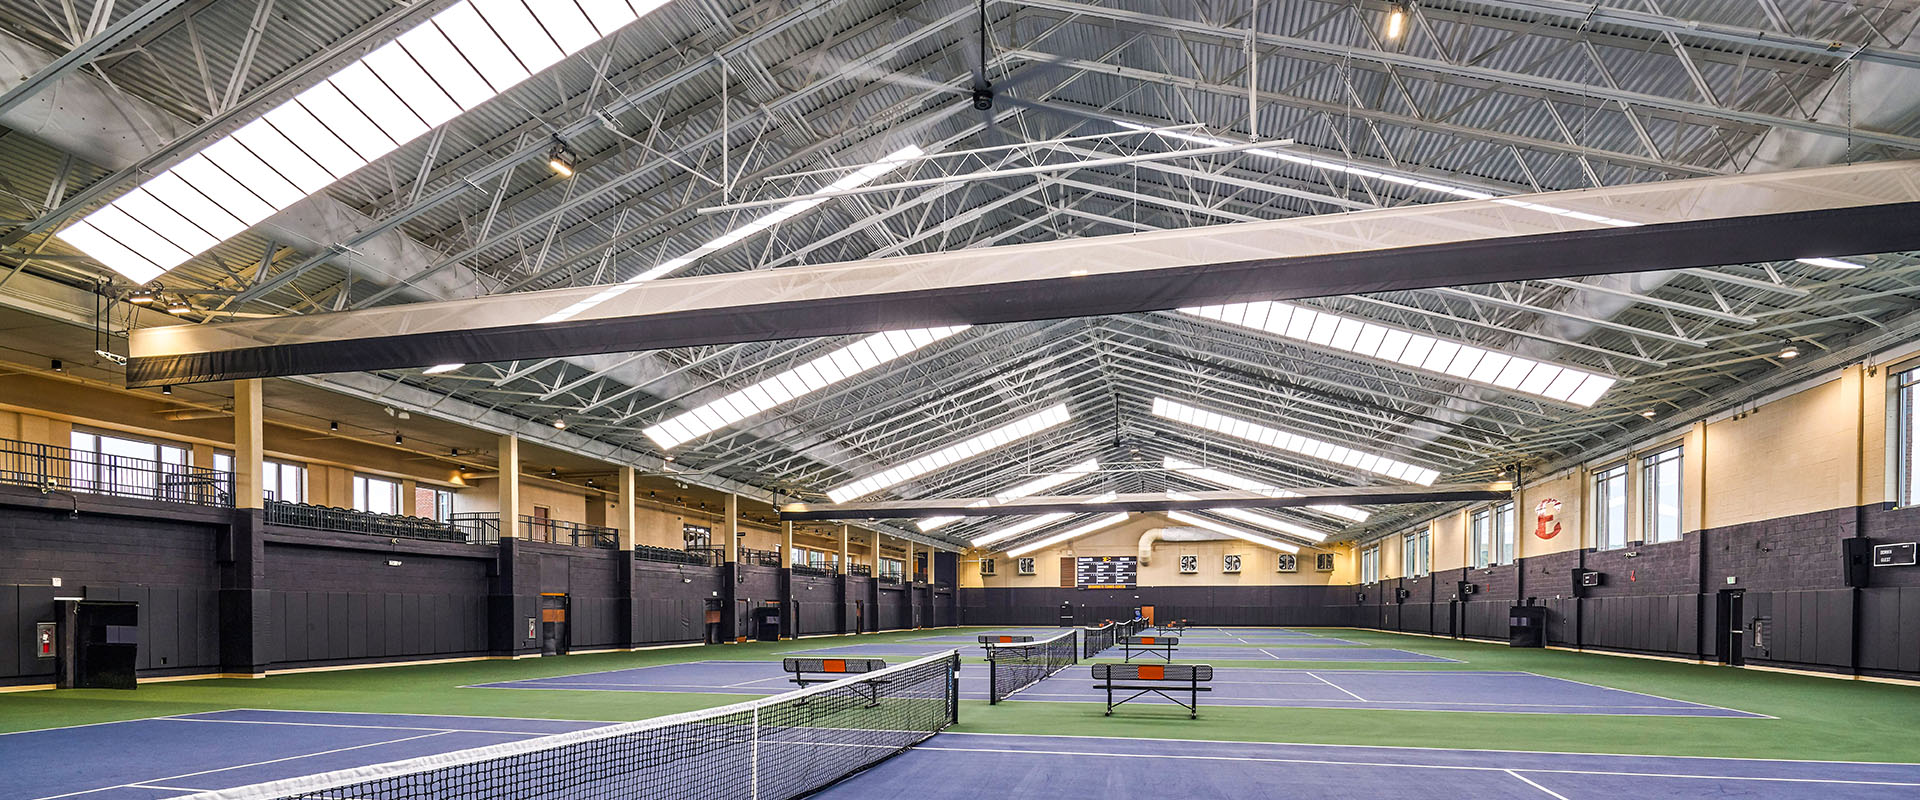 Ensworth Tennis Center